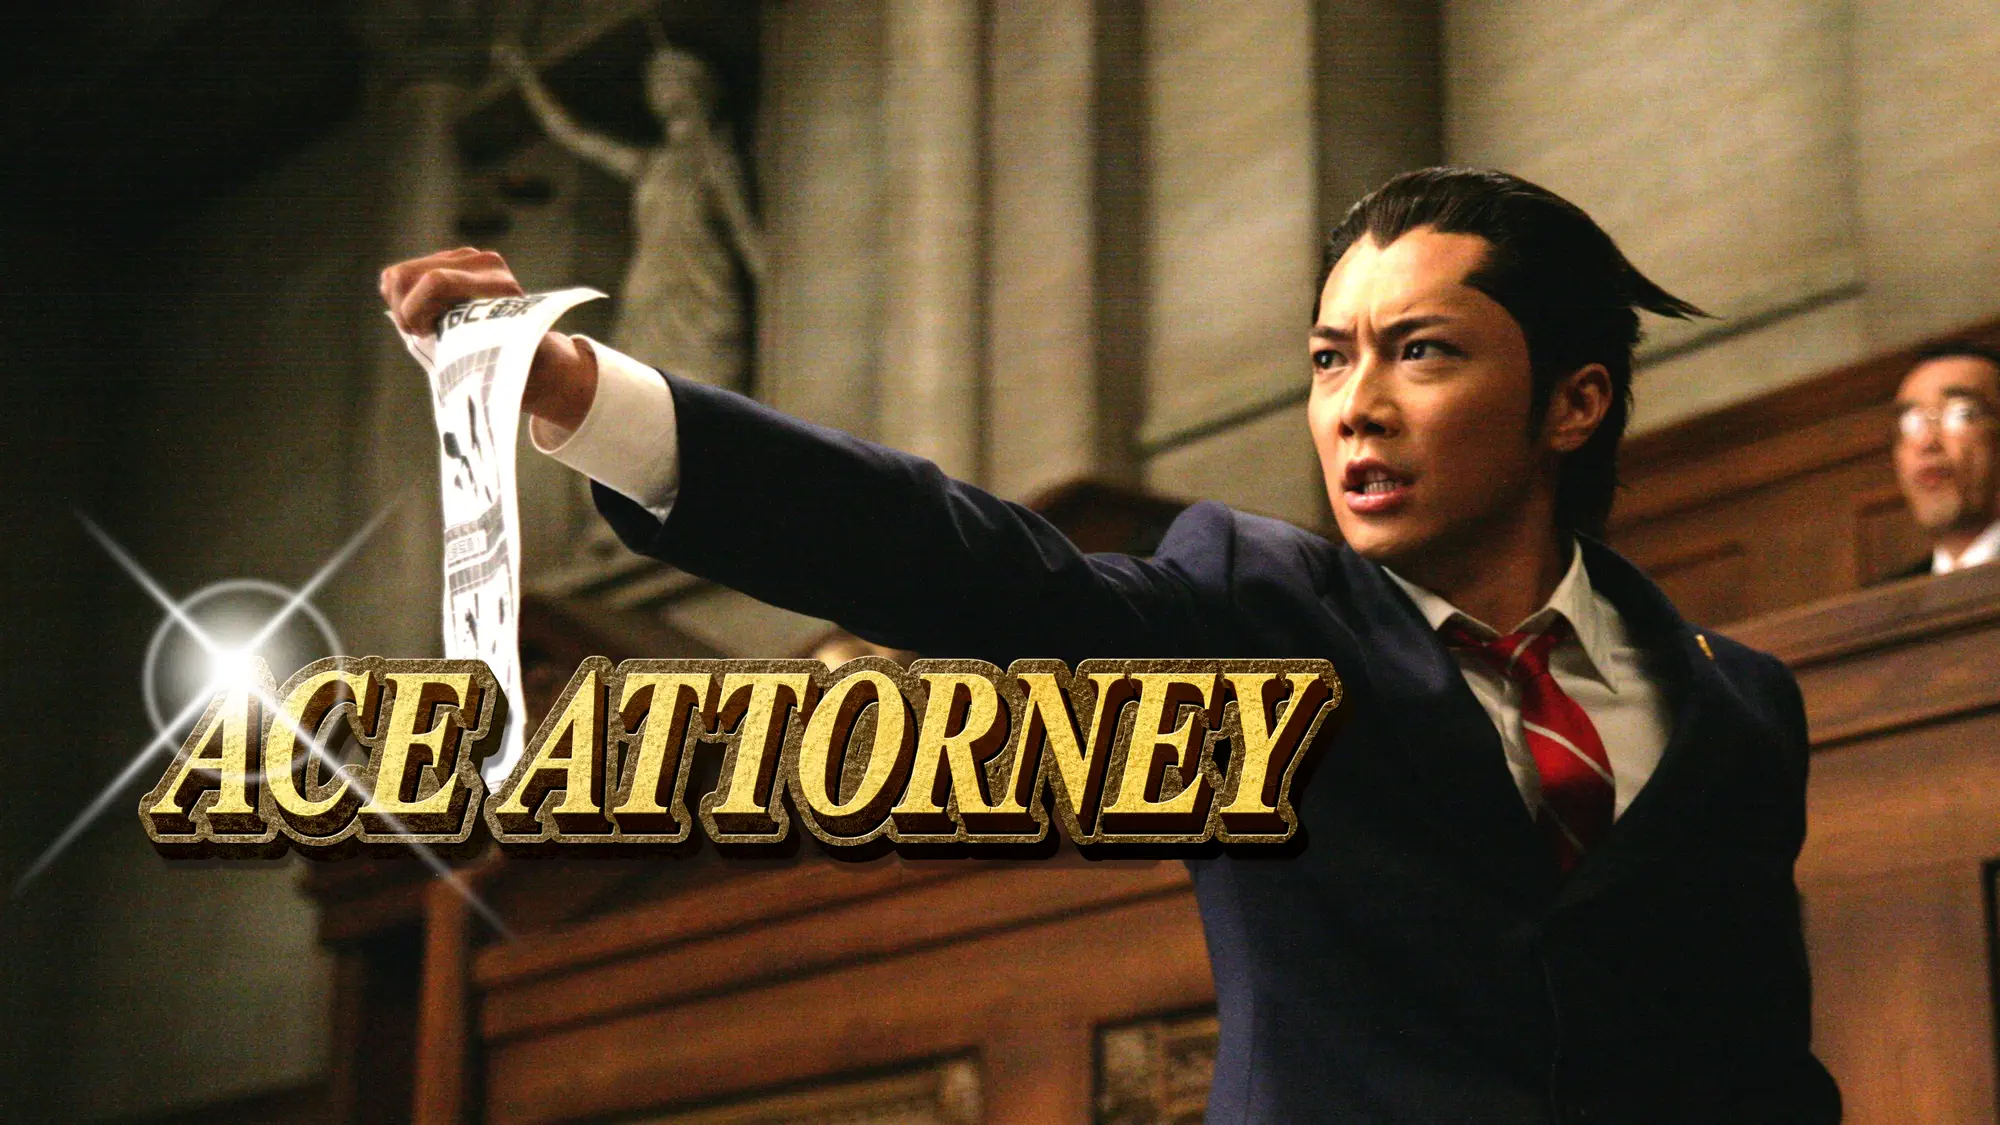 Ace Attorney (film) - Wikipedia